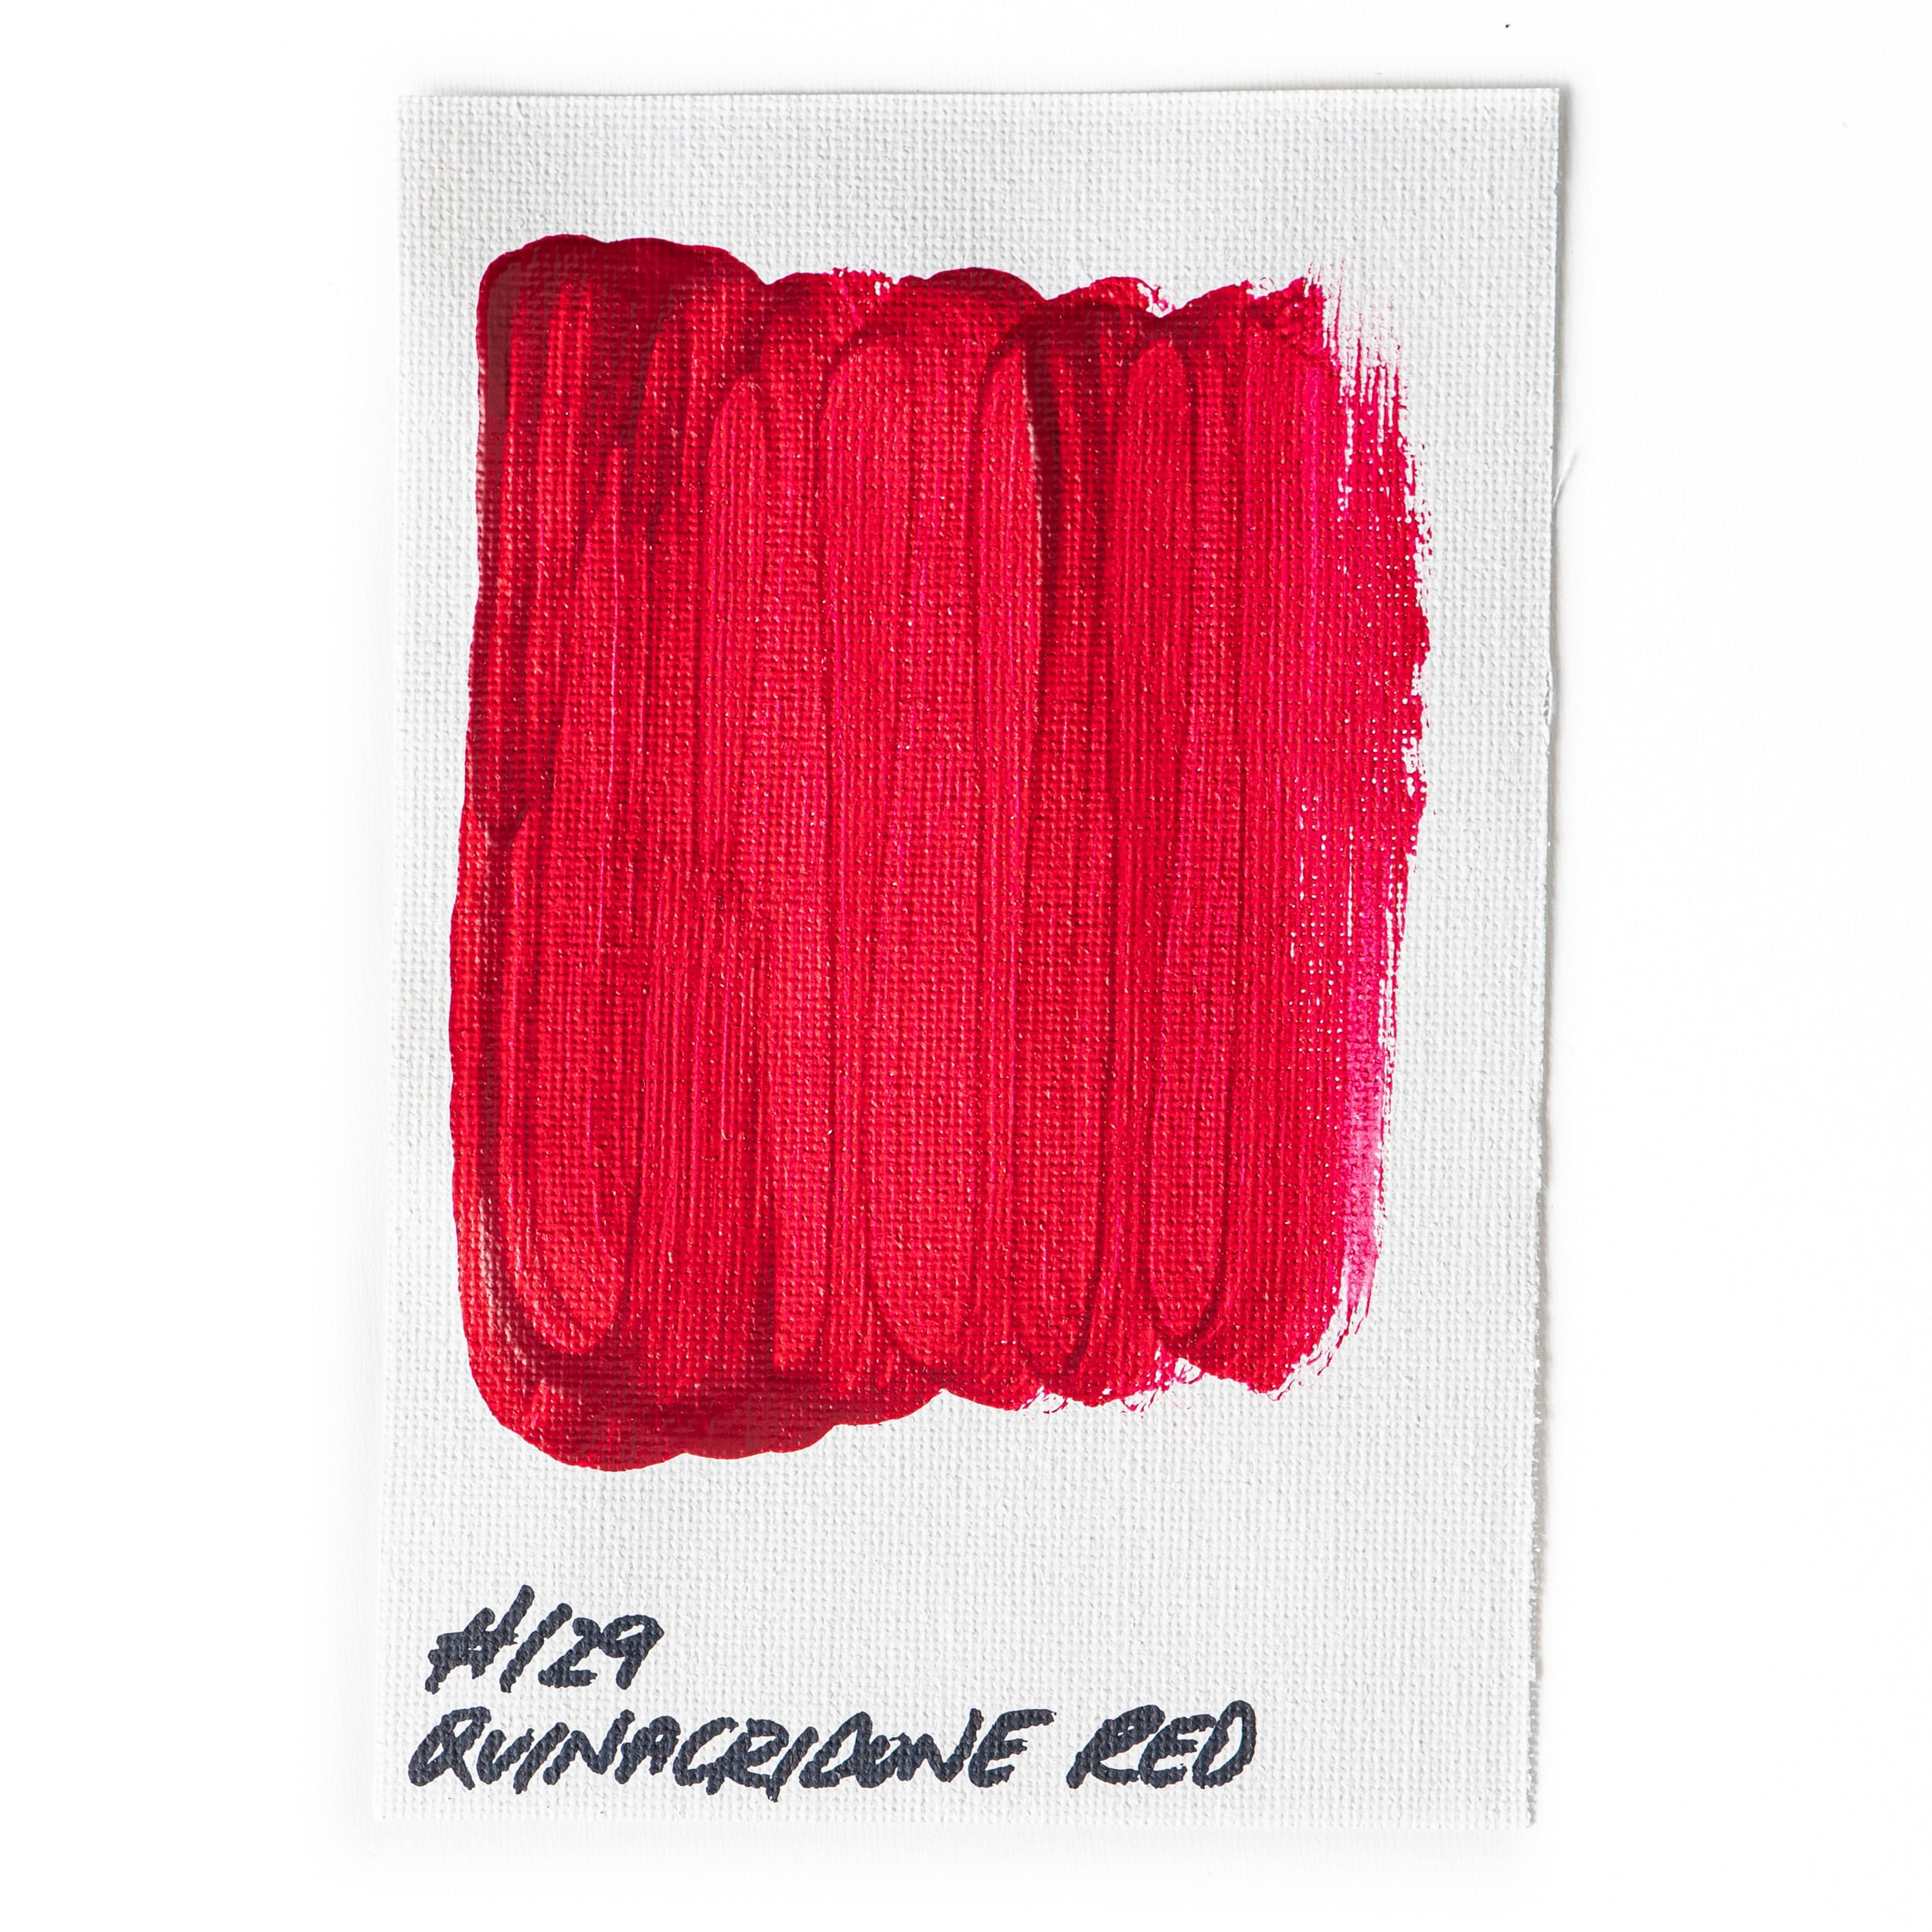 Buy #129 Quinacridone Red - Lightfastness:, - Transparent Online